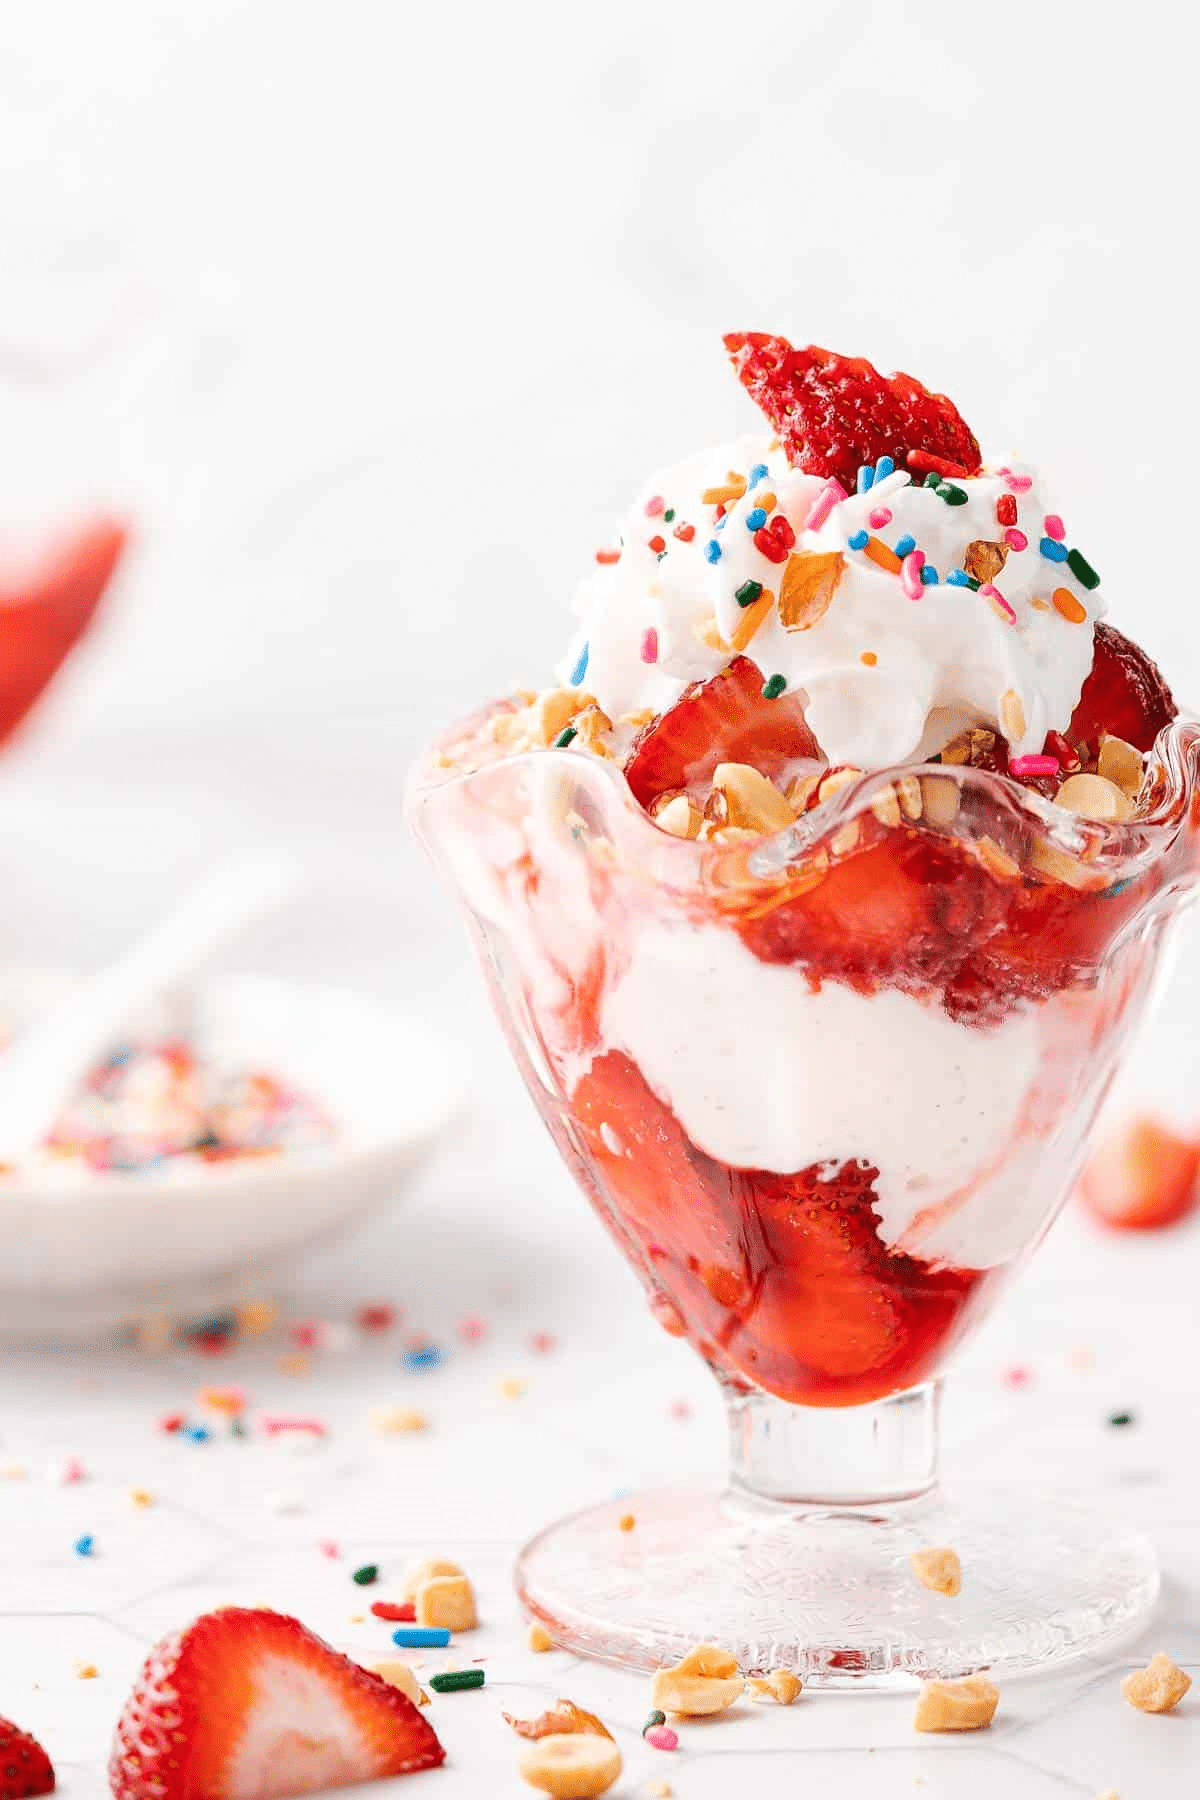 Classic strawberry sundae in an ice cream dish. 